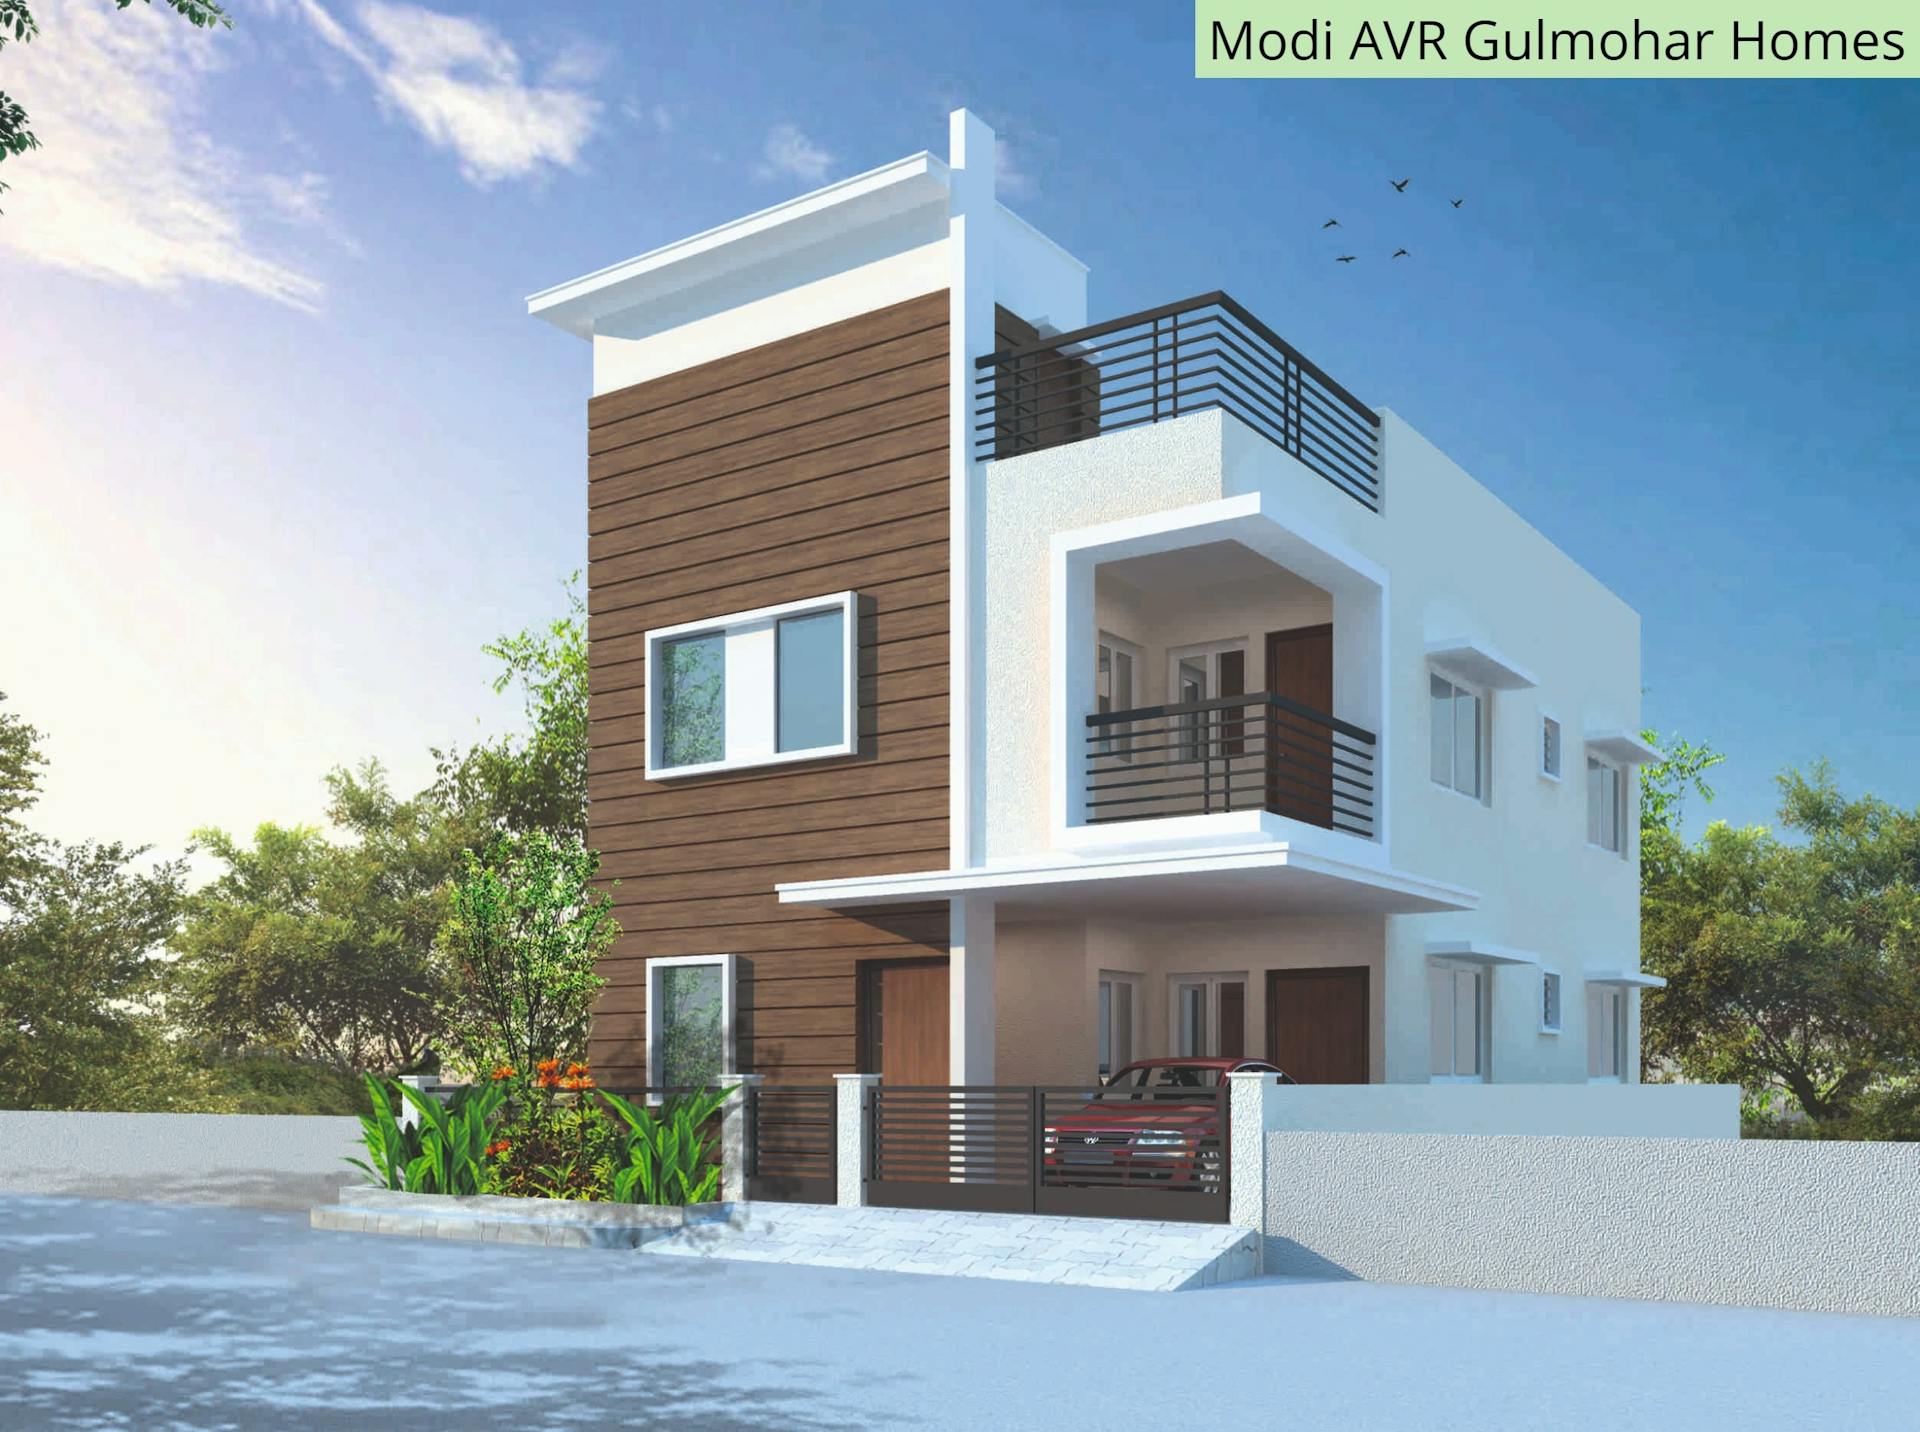 Image of Modi AVR Gulmohar Homes